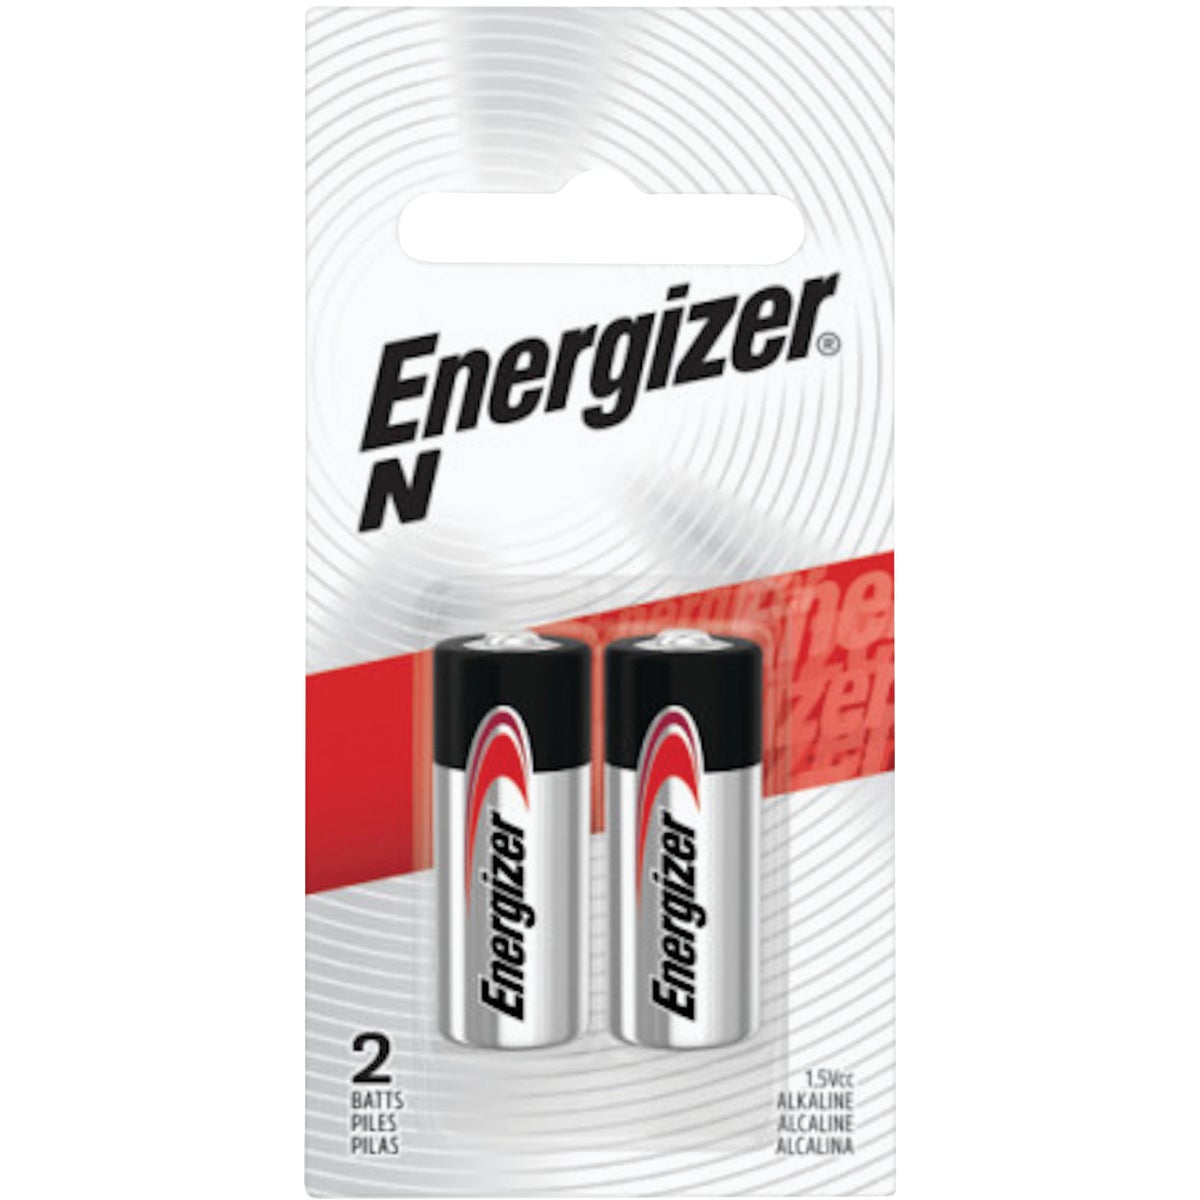 Energizer N Alkaline Battery (2-Pack)